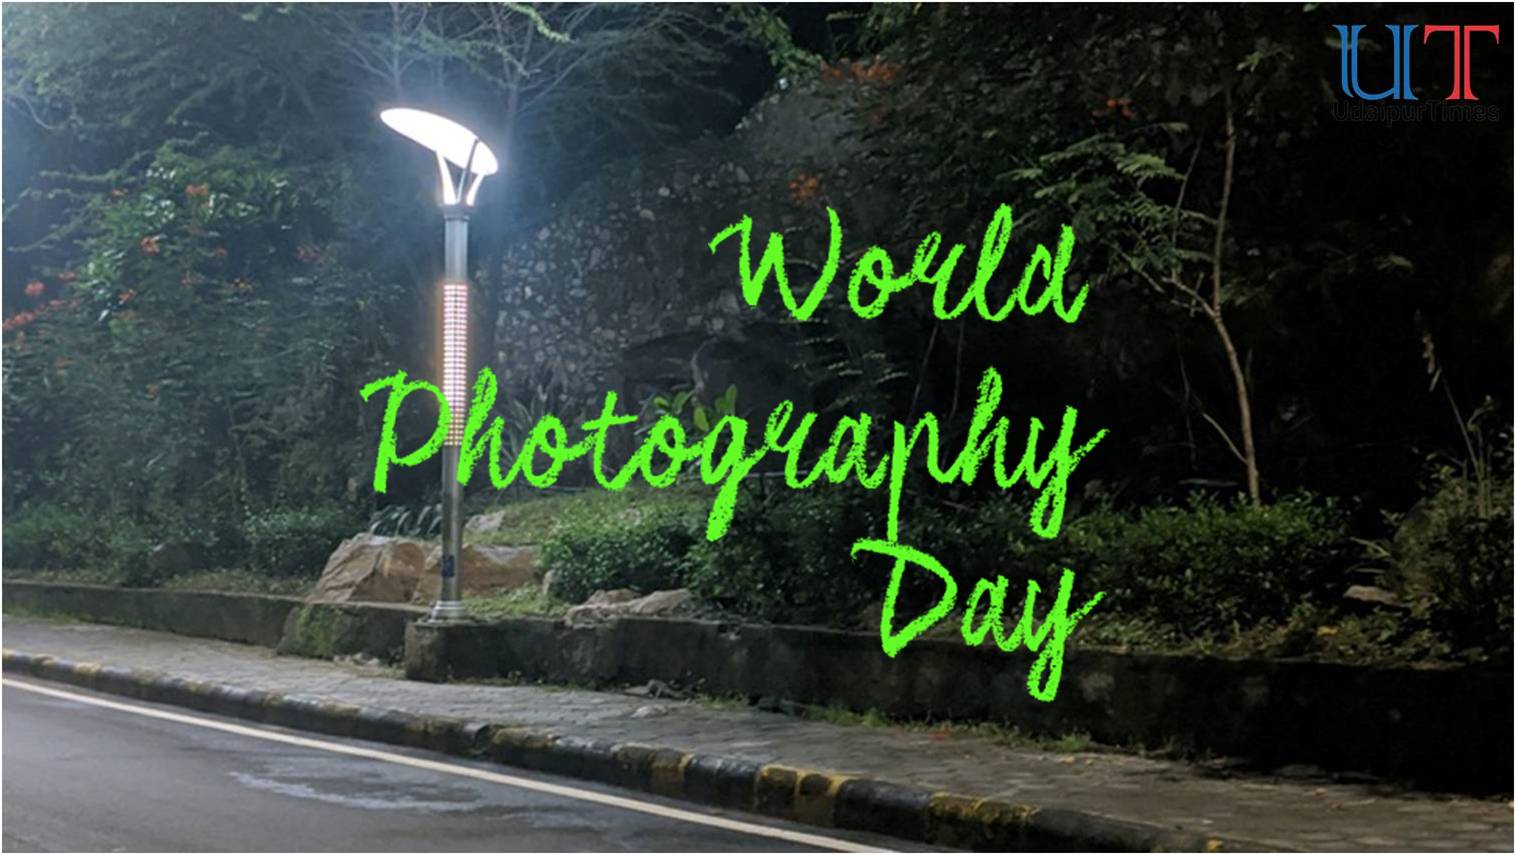 [Photos] Udaipur on World Photography Day 2020